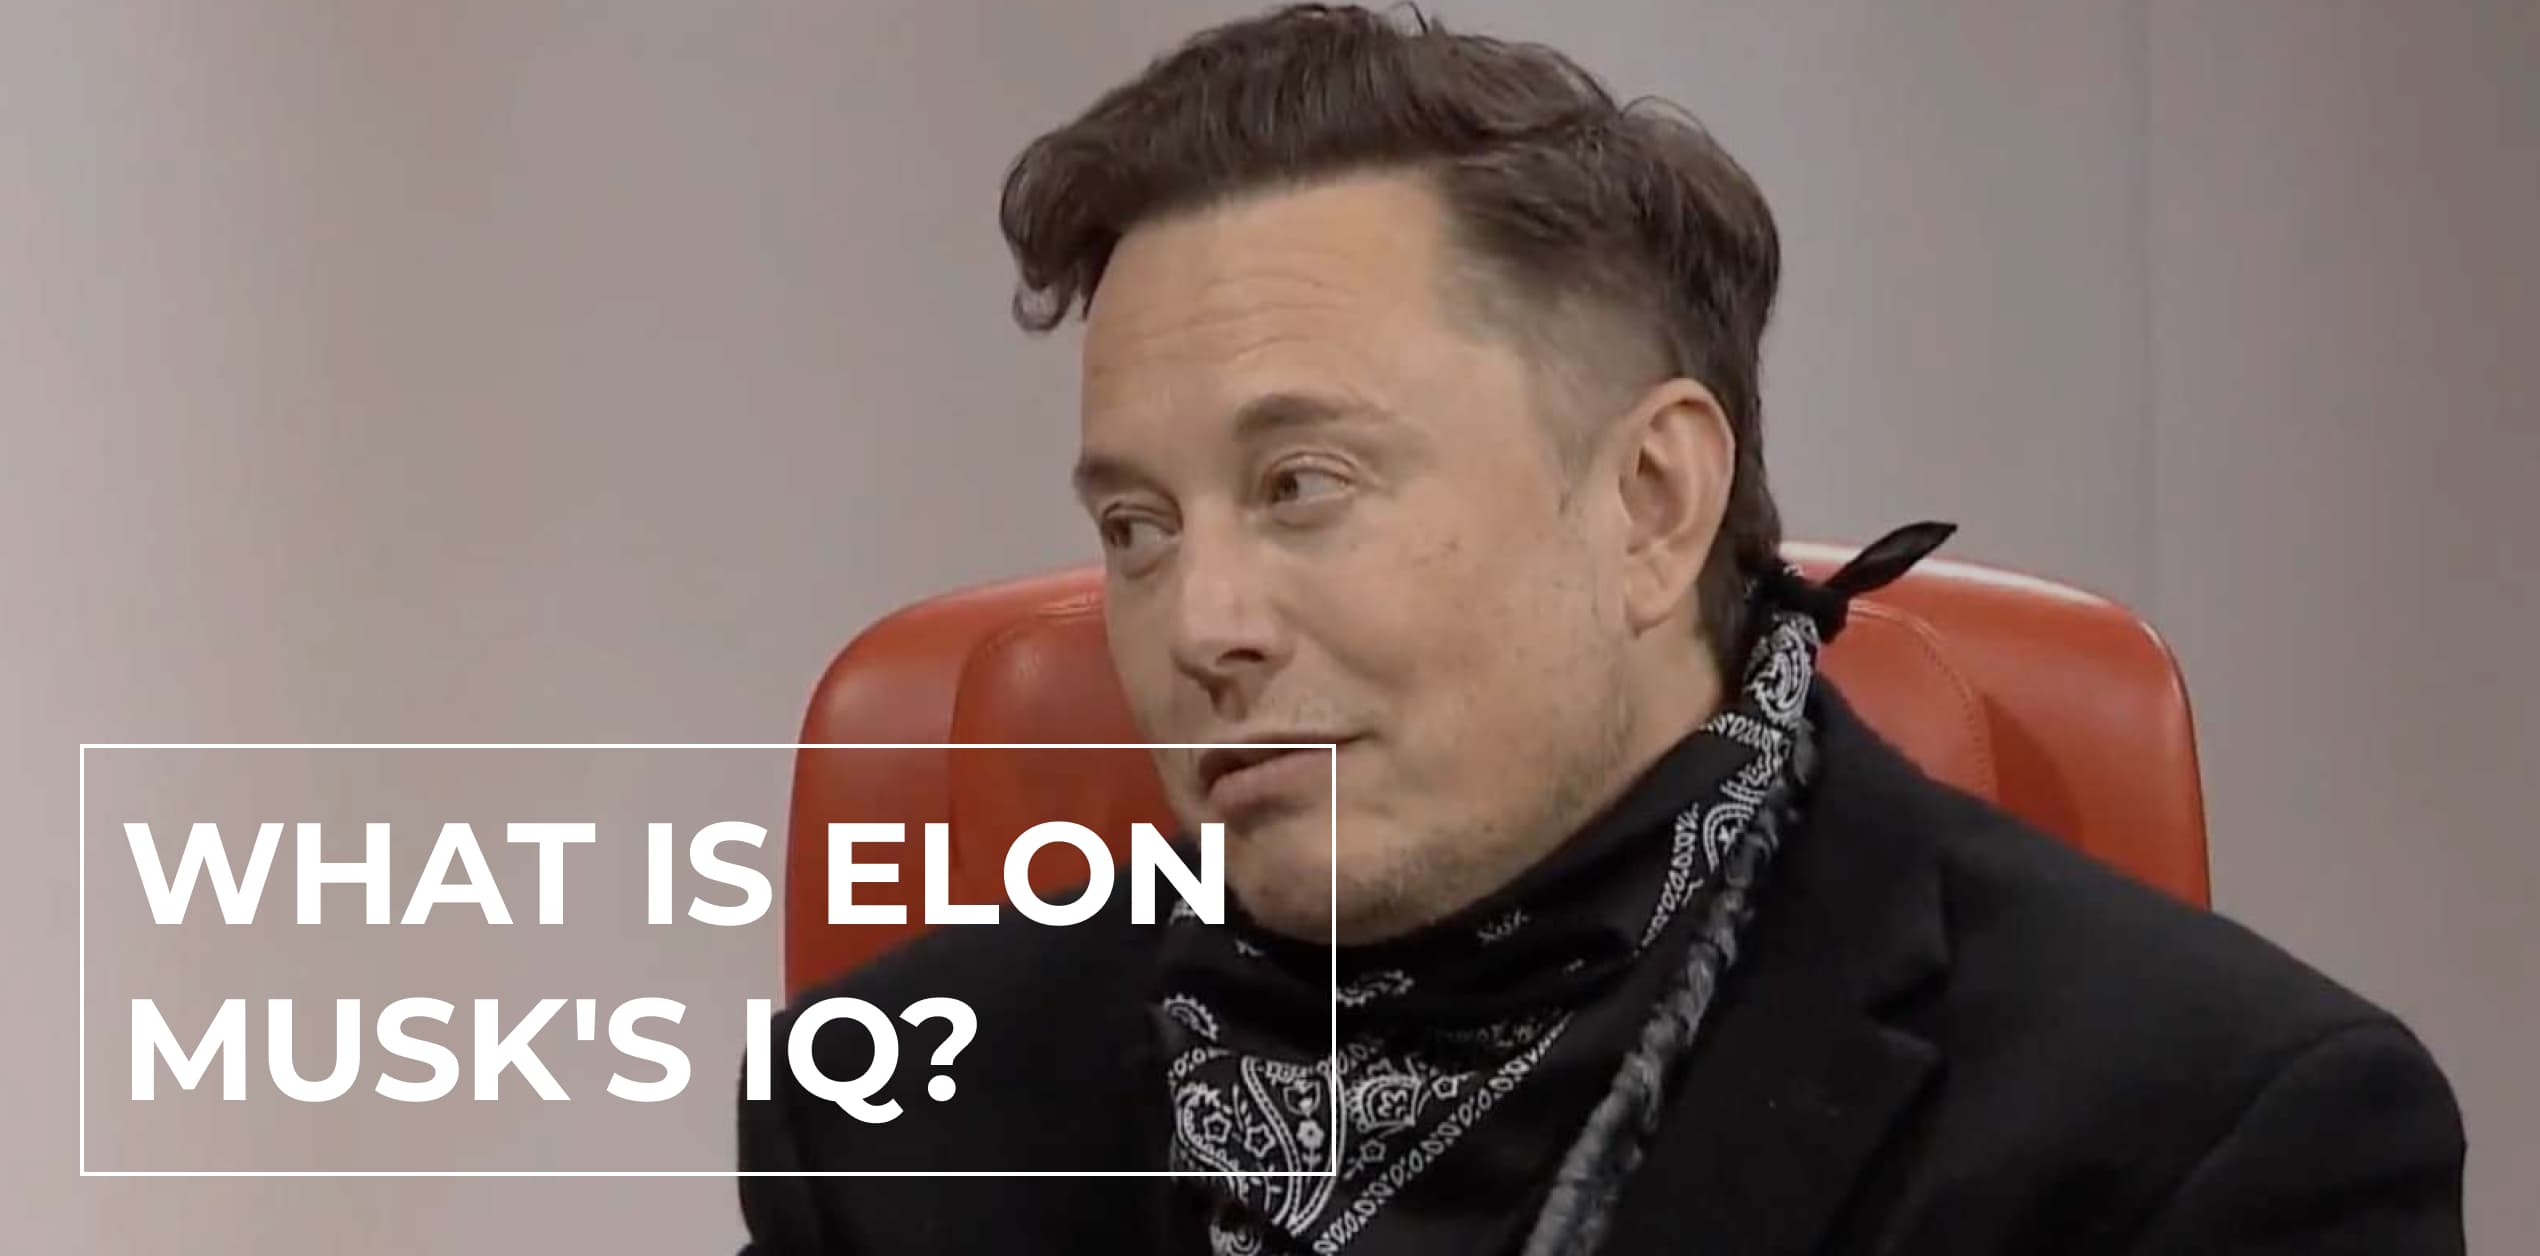 What is Elon Musk's IQ